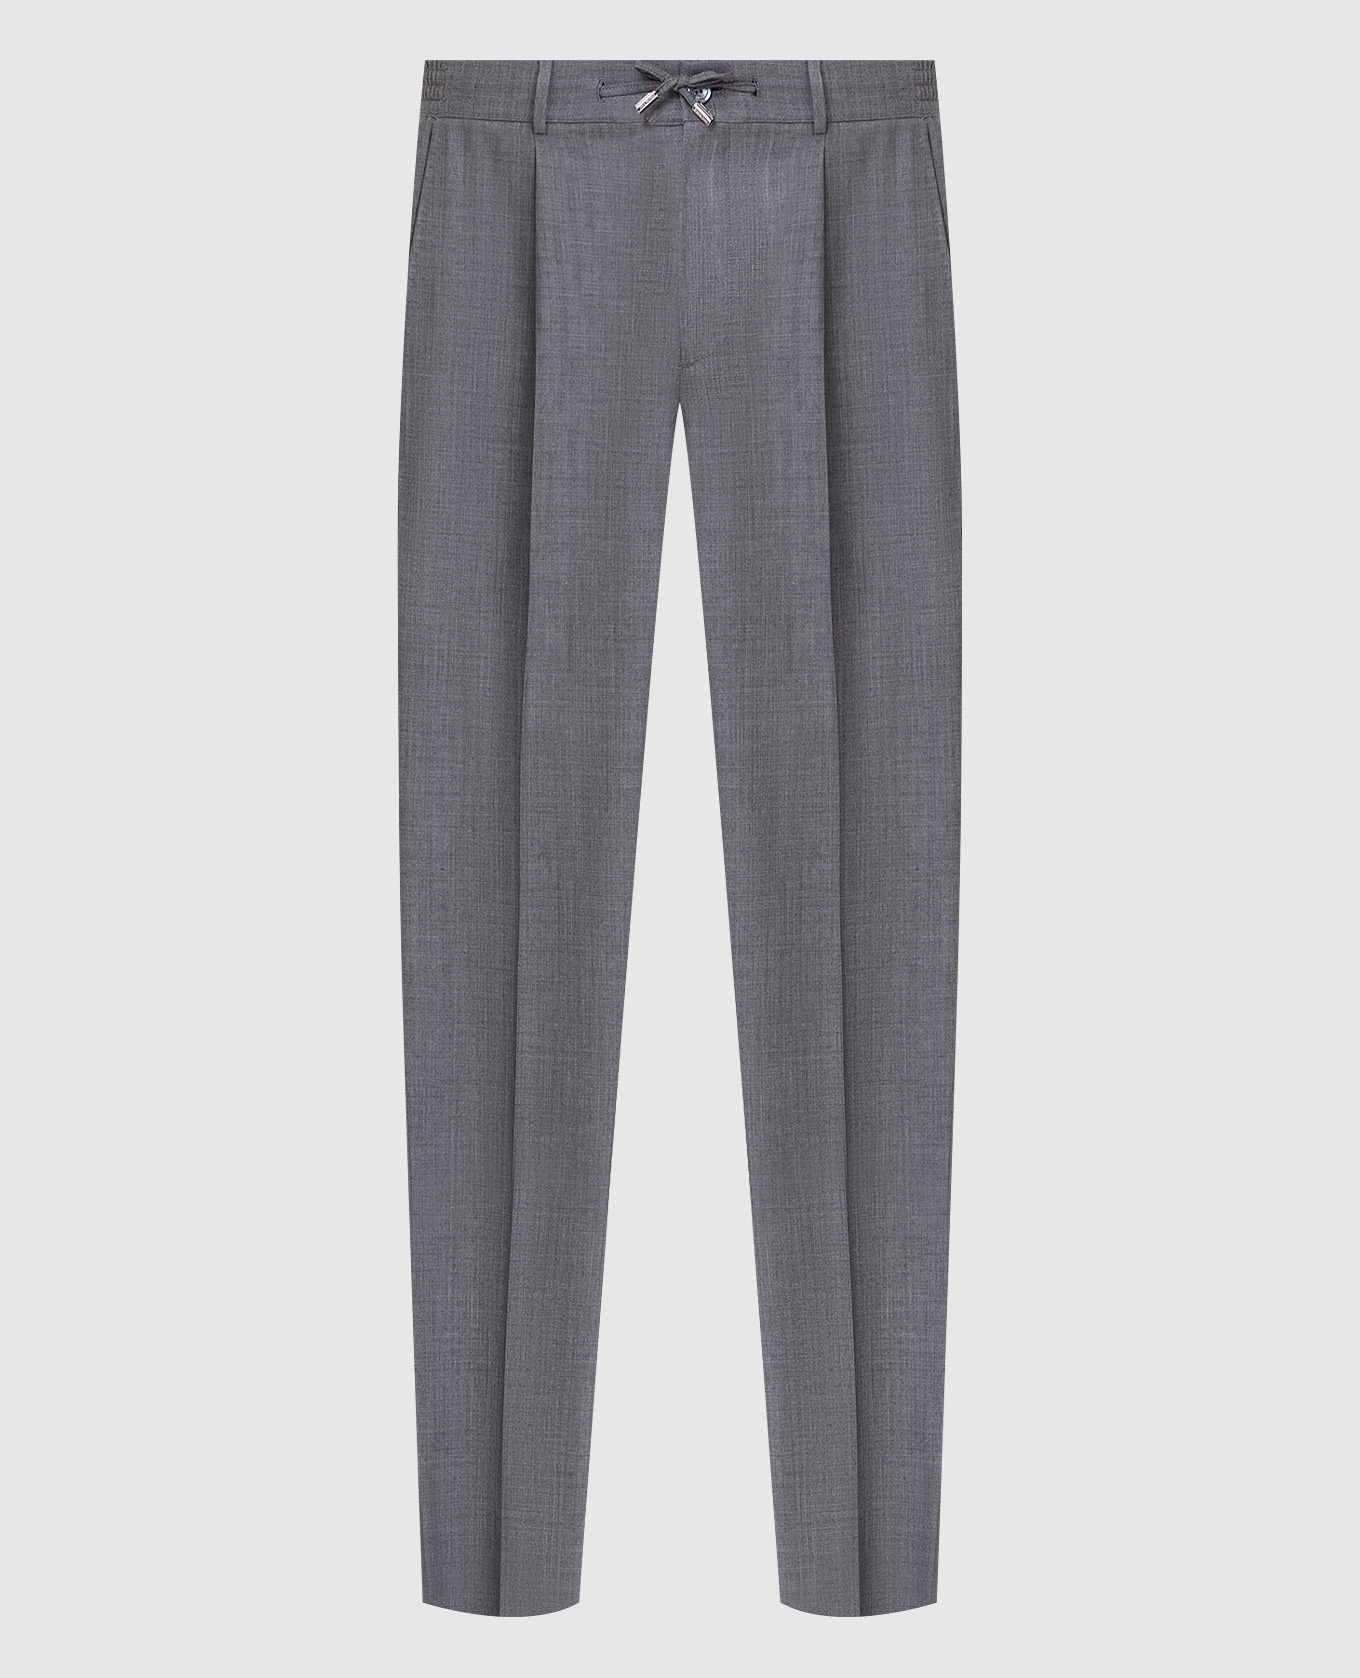 Gray wool, cashmere and silk slacks